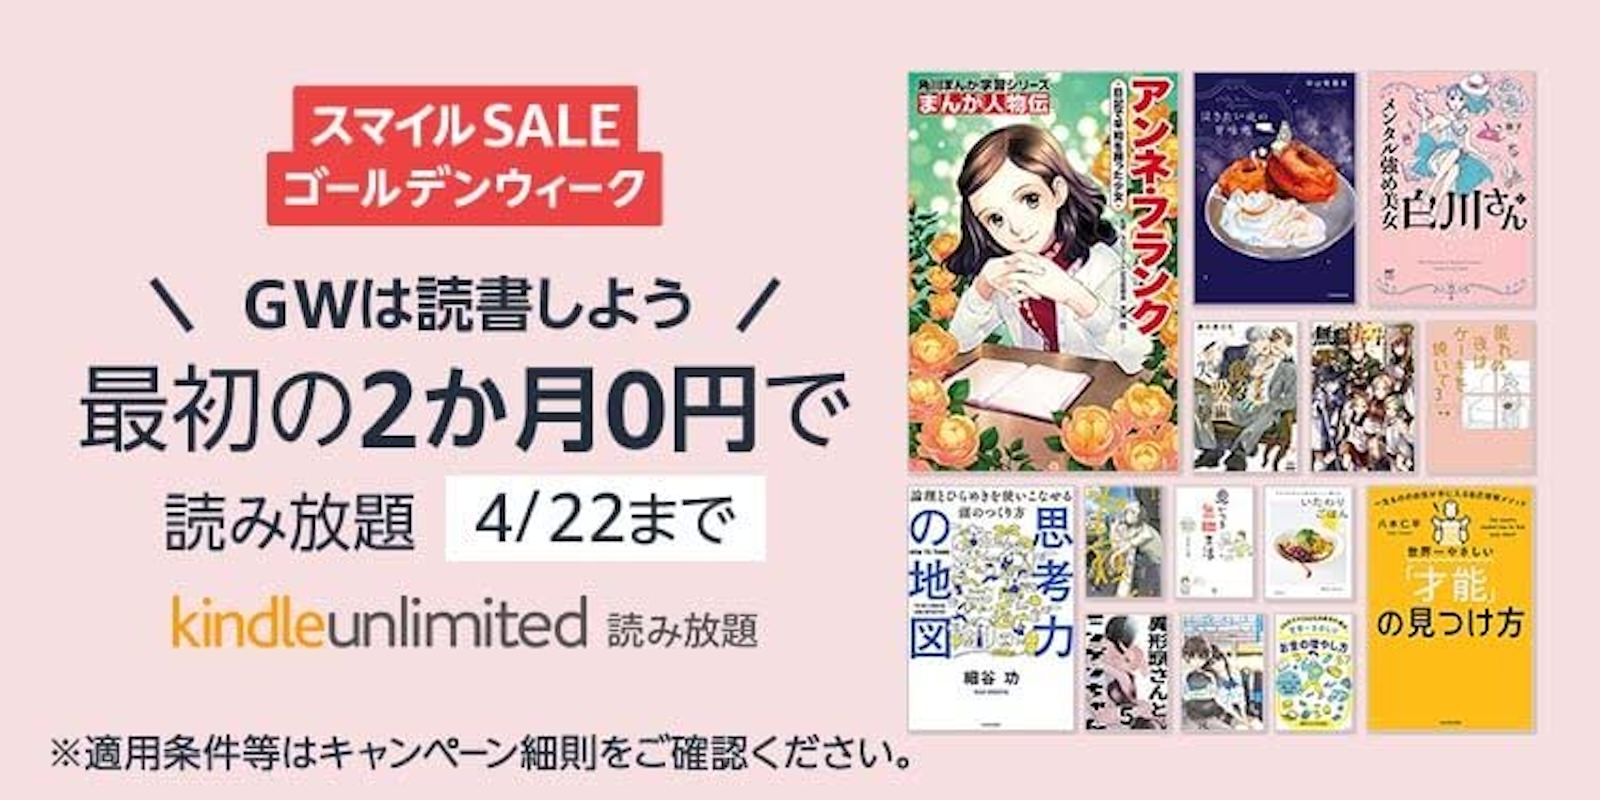 Kindle-Unlimited-GW-sale.jpg